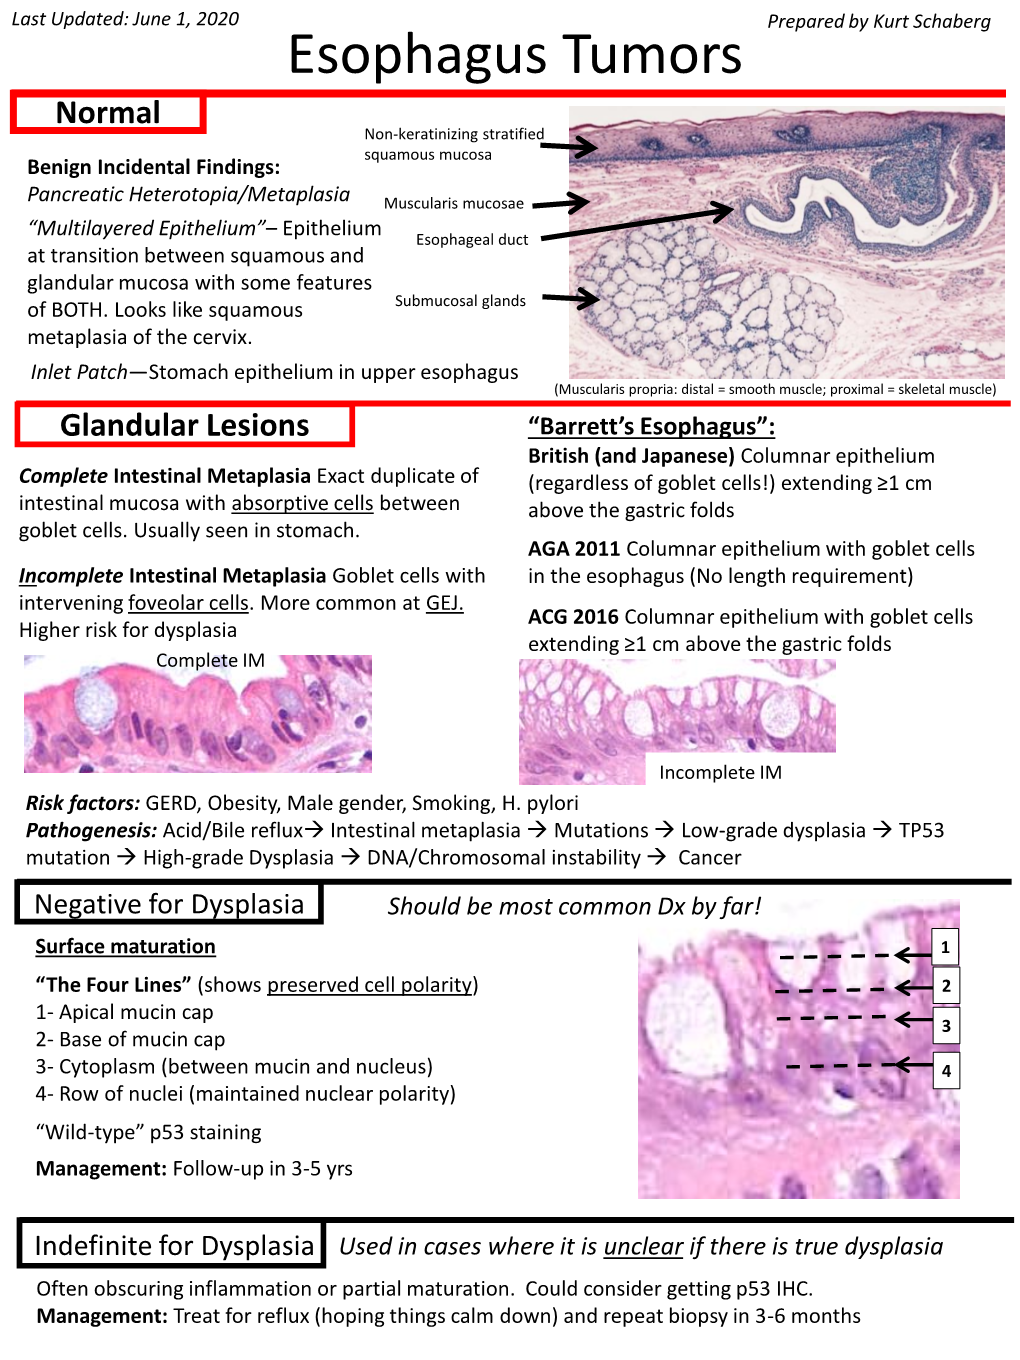 Esophagus Tumors Normal Non-Keratinizing Stratified Squamous Mucosa Benign Incidental Findings: Pancreatic Heterotopia/Metaplasia Muscularis Mucosae